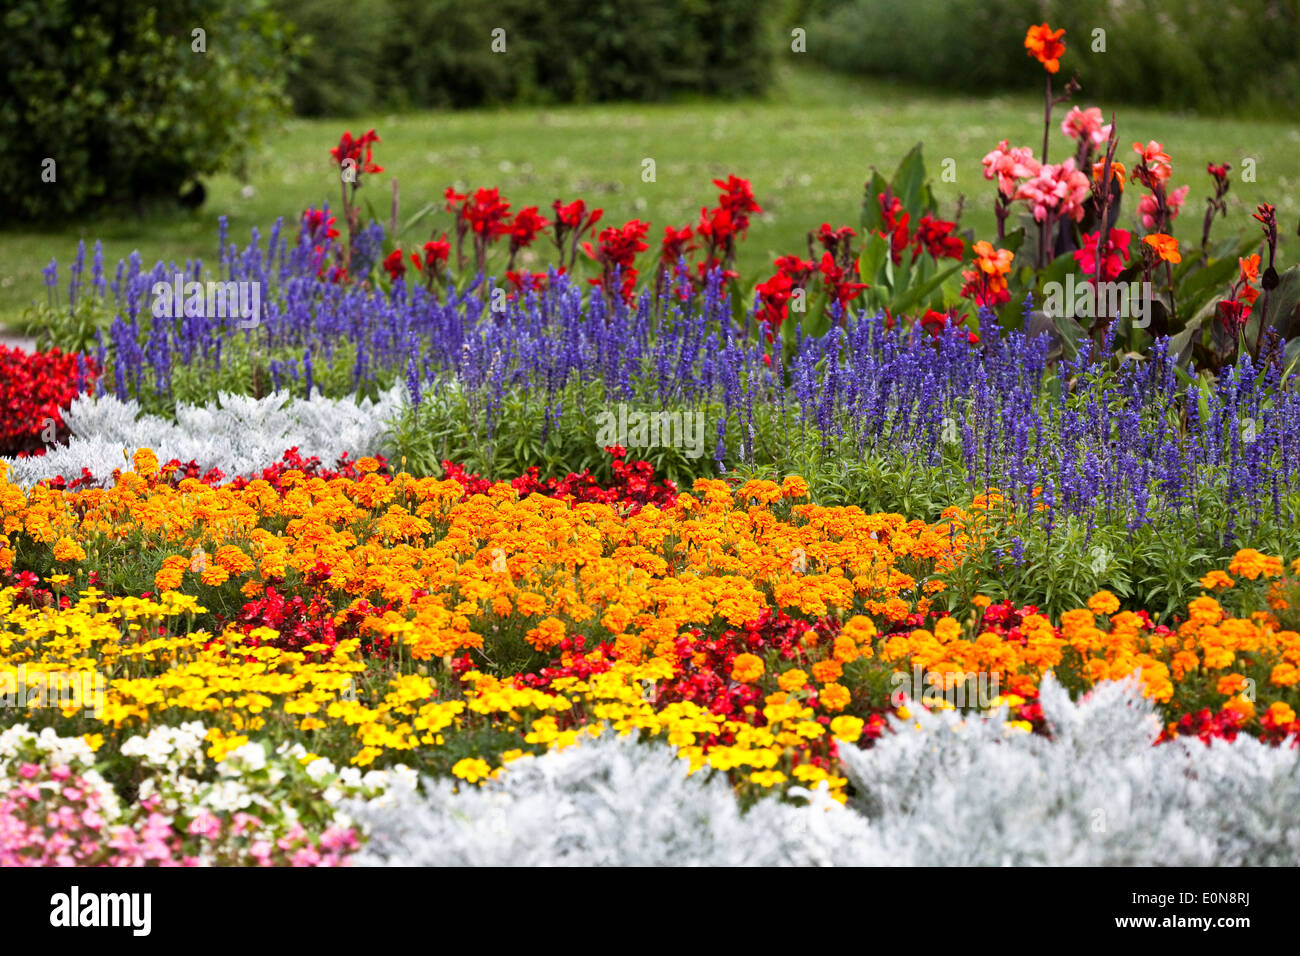 Blumengarten - flower garden Stock Photo